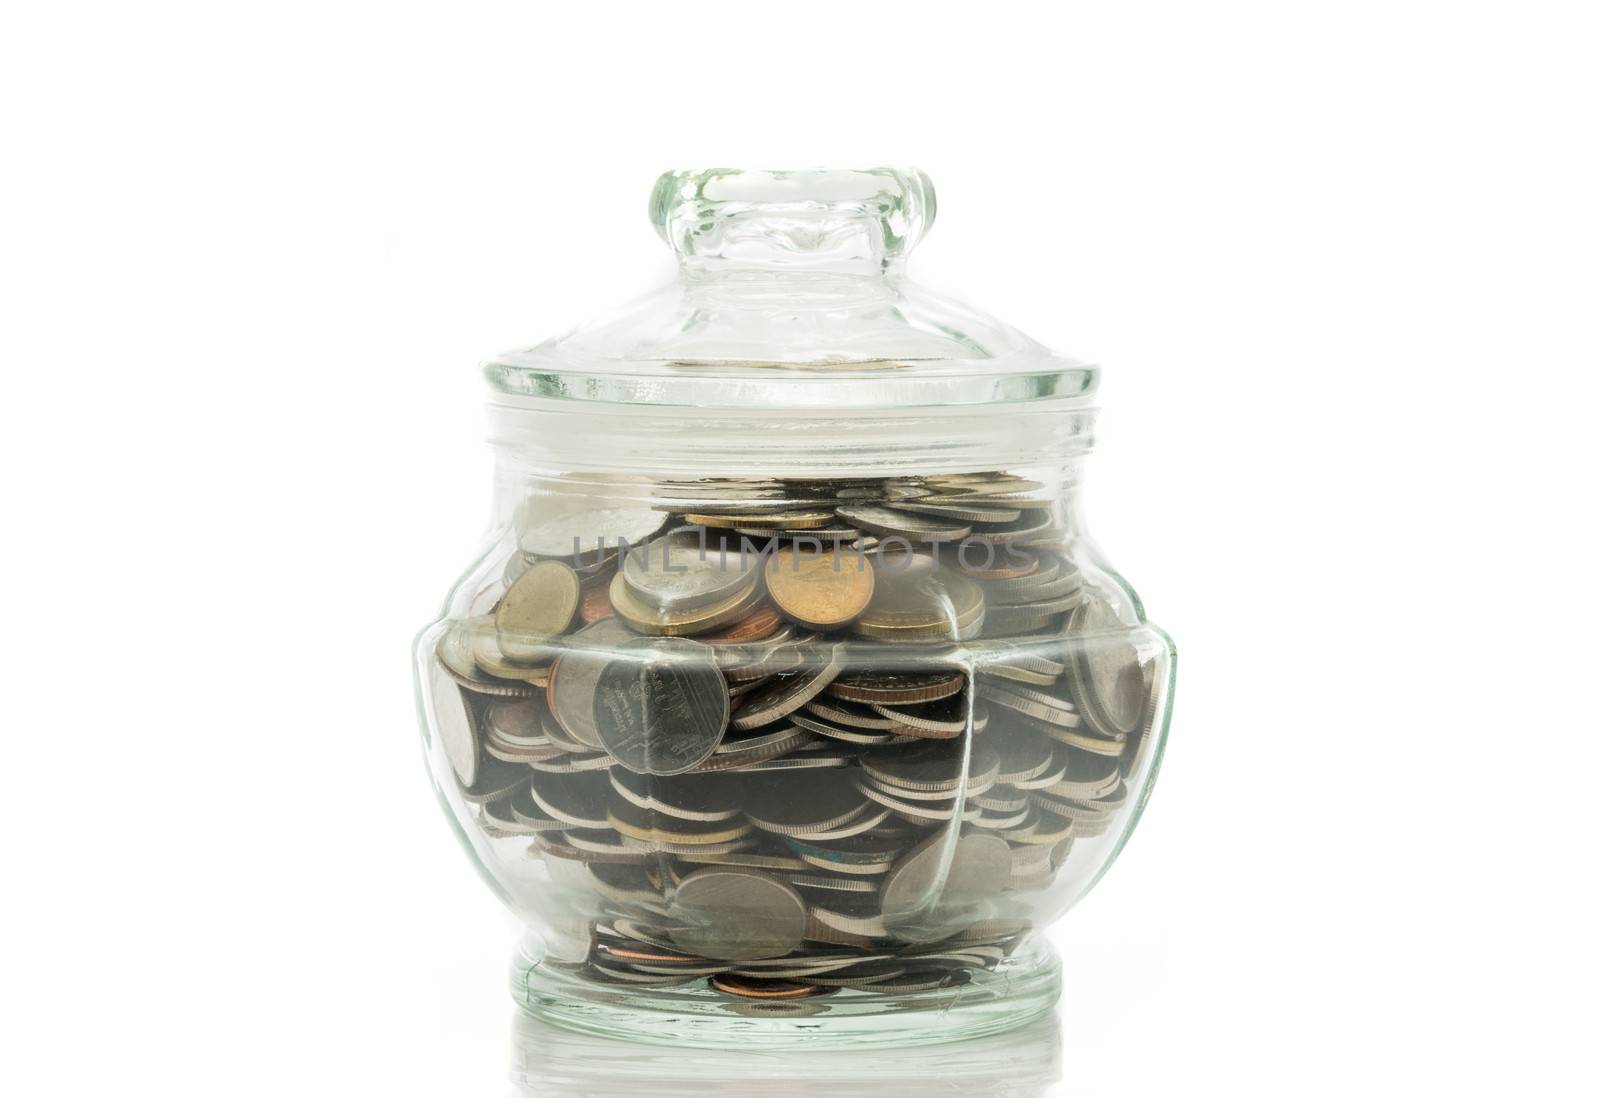 Bath coins in a glass jar with lid by Sorapop